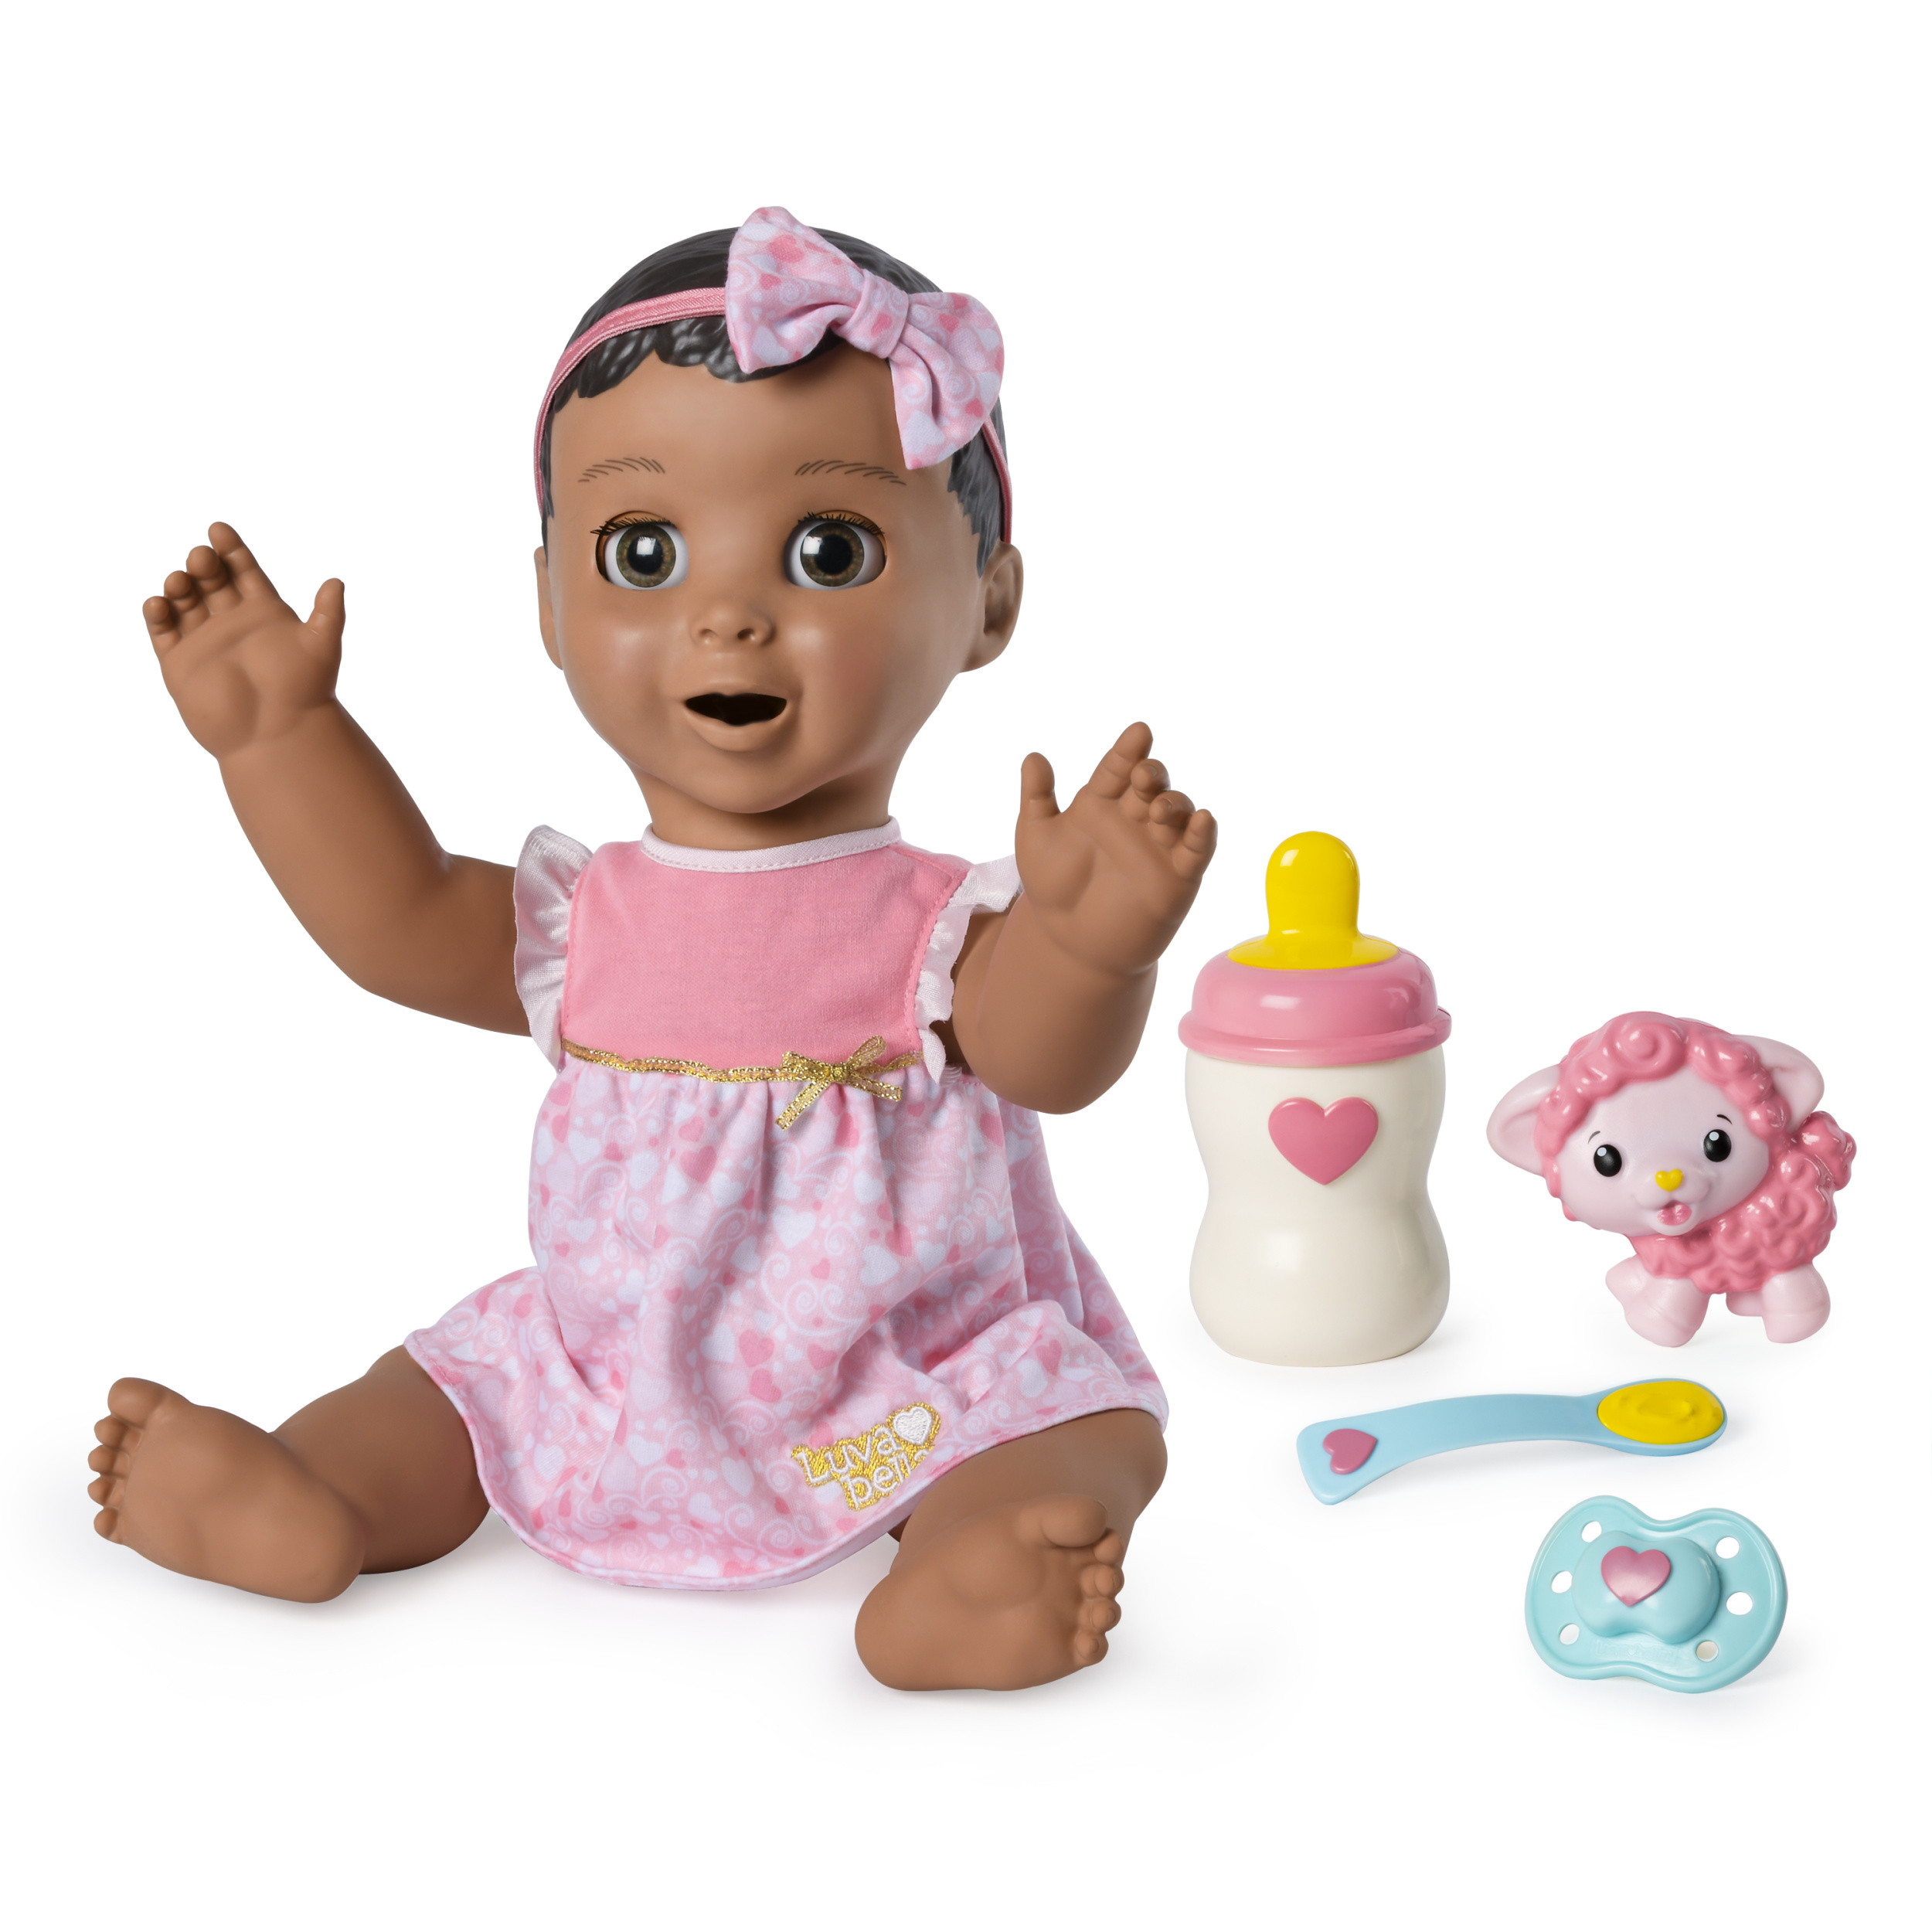 Luvabella Responsive Baby Doll - Brunette Hair
 Luvabella Brown Hair Responsive Baby Doll with Real